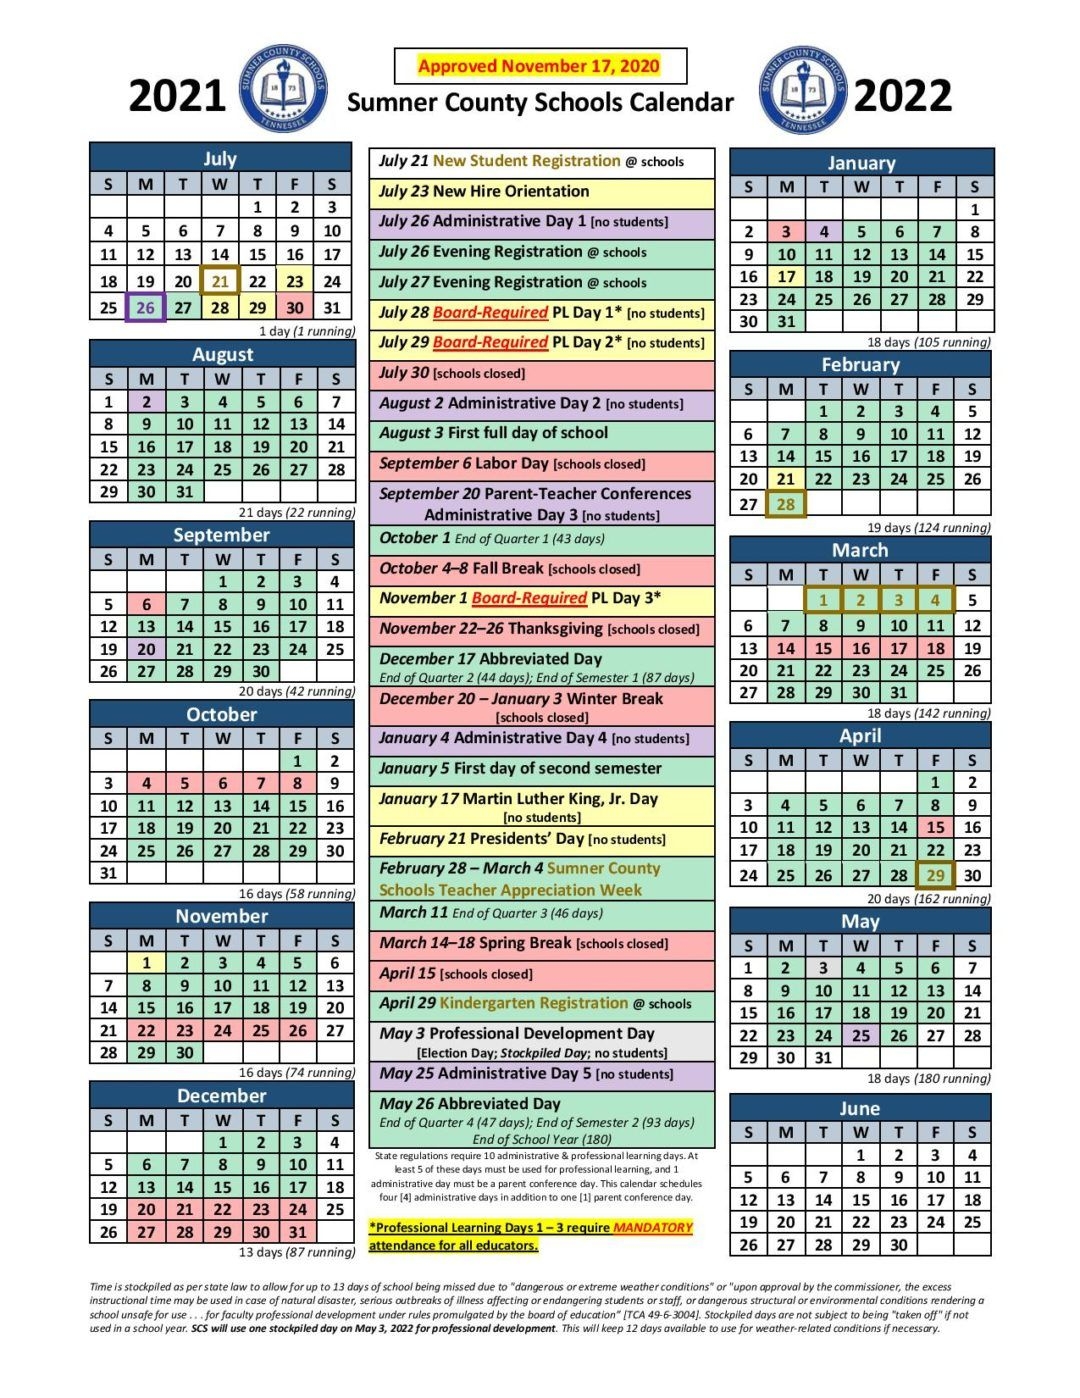 Universal Calendar 2022 Brunei School Holiday | Get Your Calendar Printable